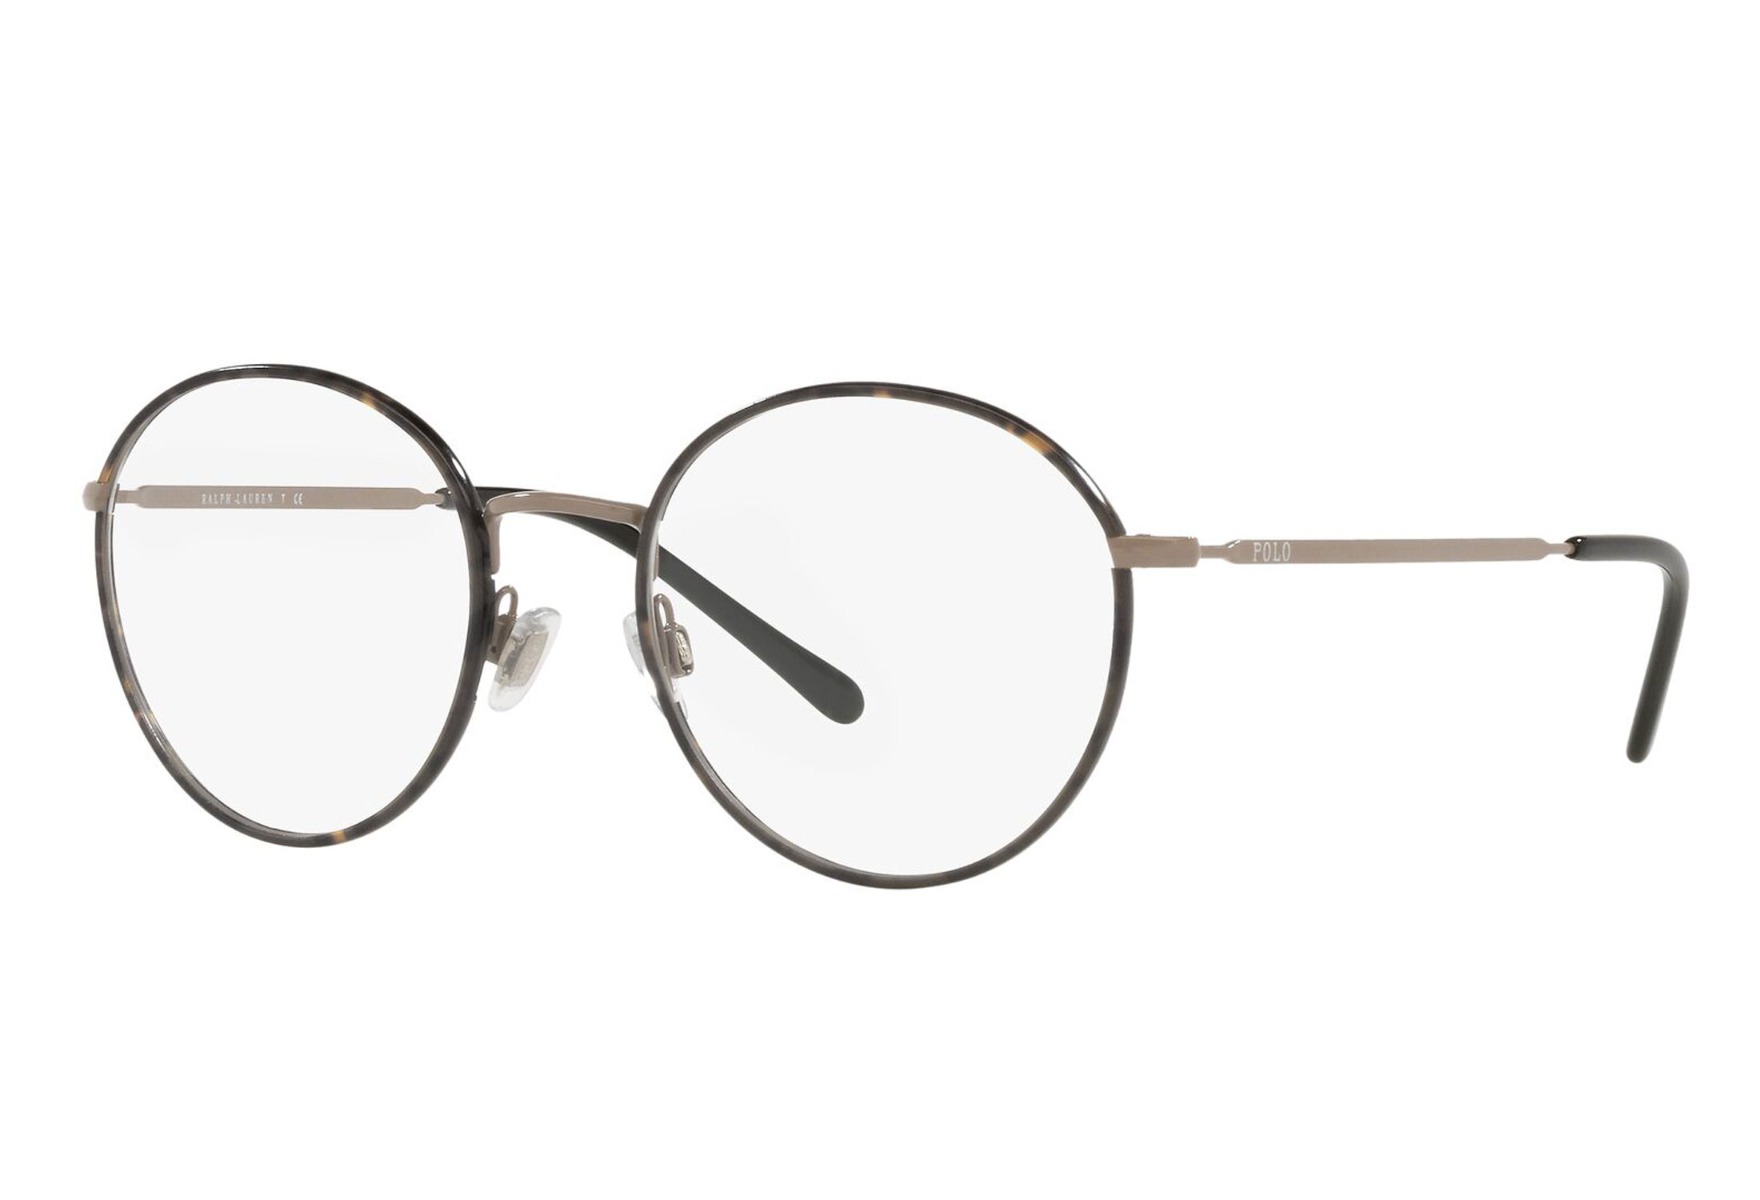 Polo briller - ph2201 5756 - Clear, Mønstret, Medium Hel ramme i Metall, Plast - Rund